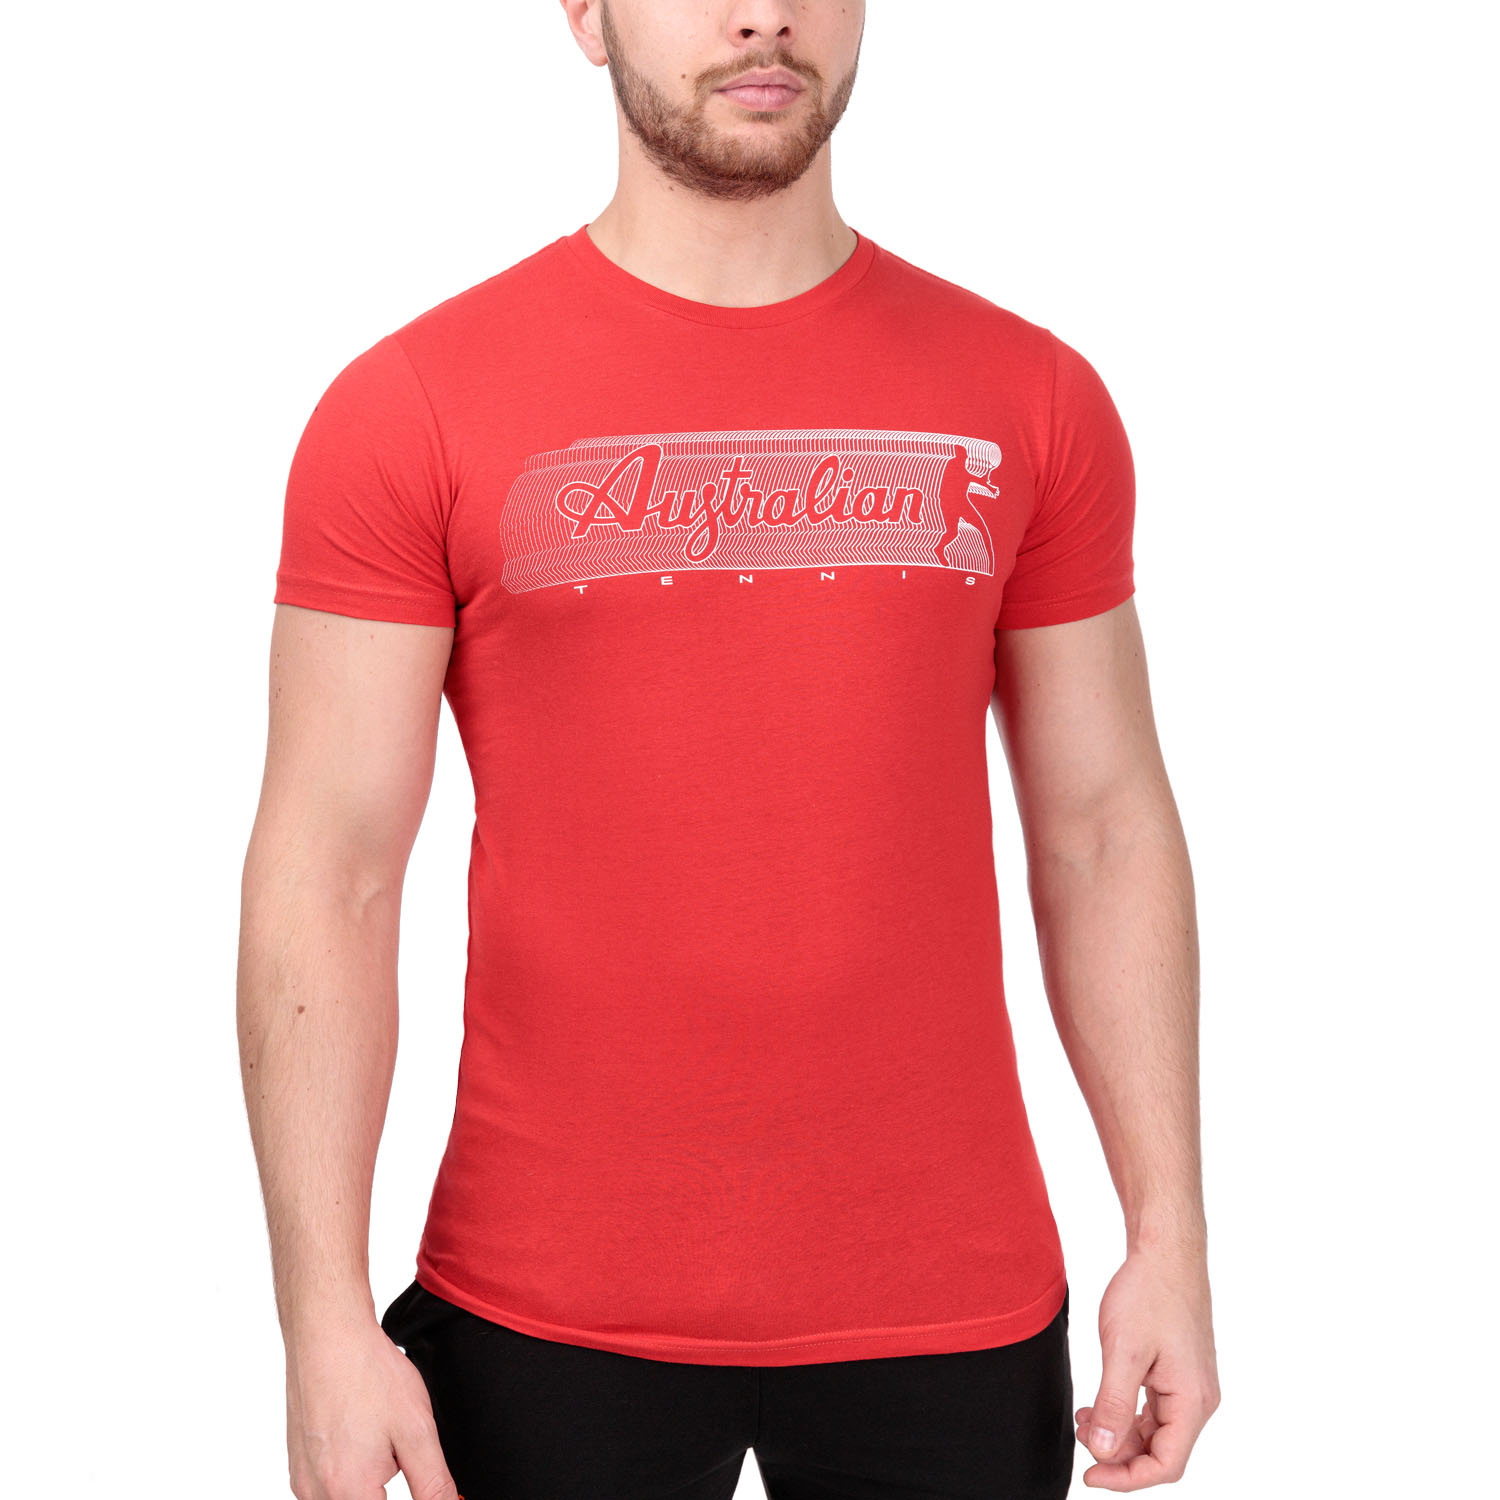 Australian Gradient Camiseta - Rosso Vivo